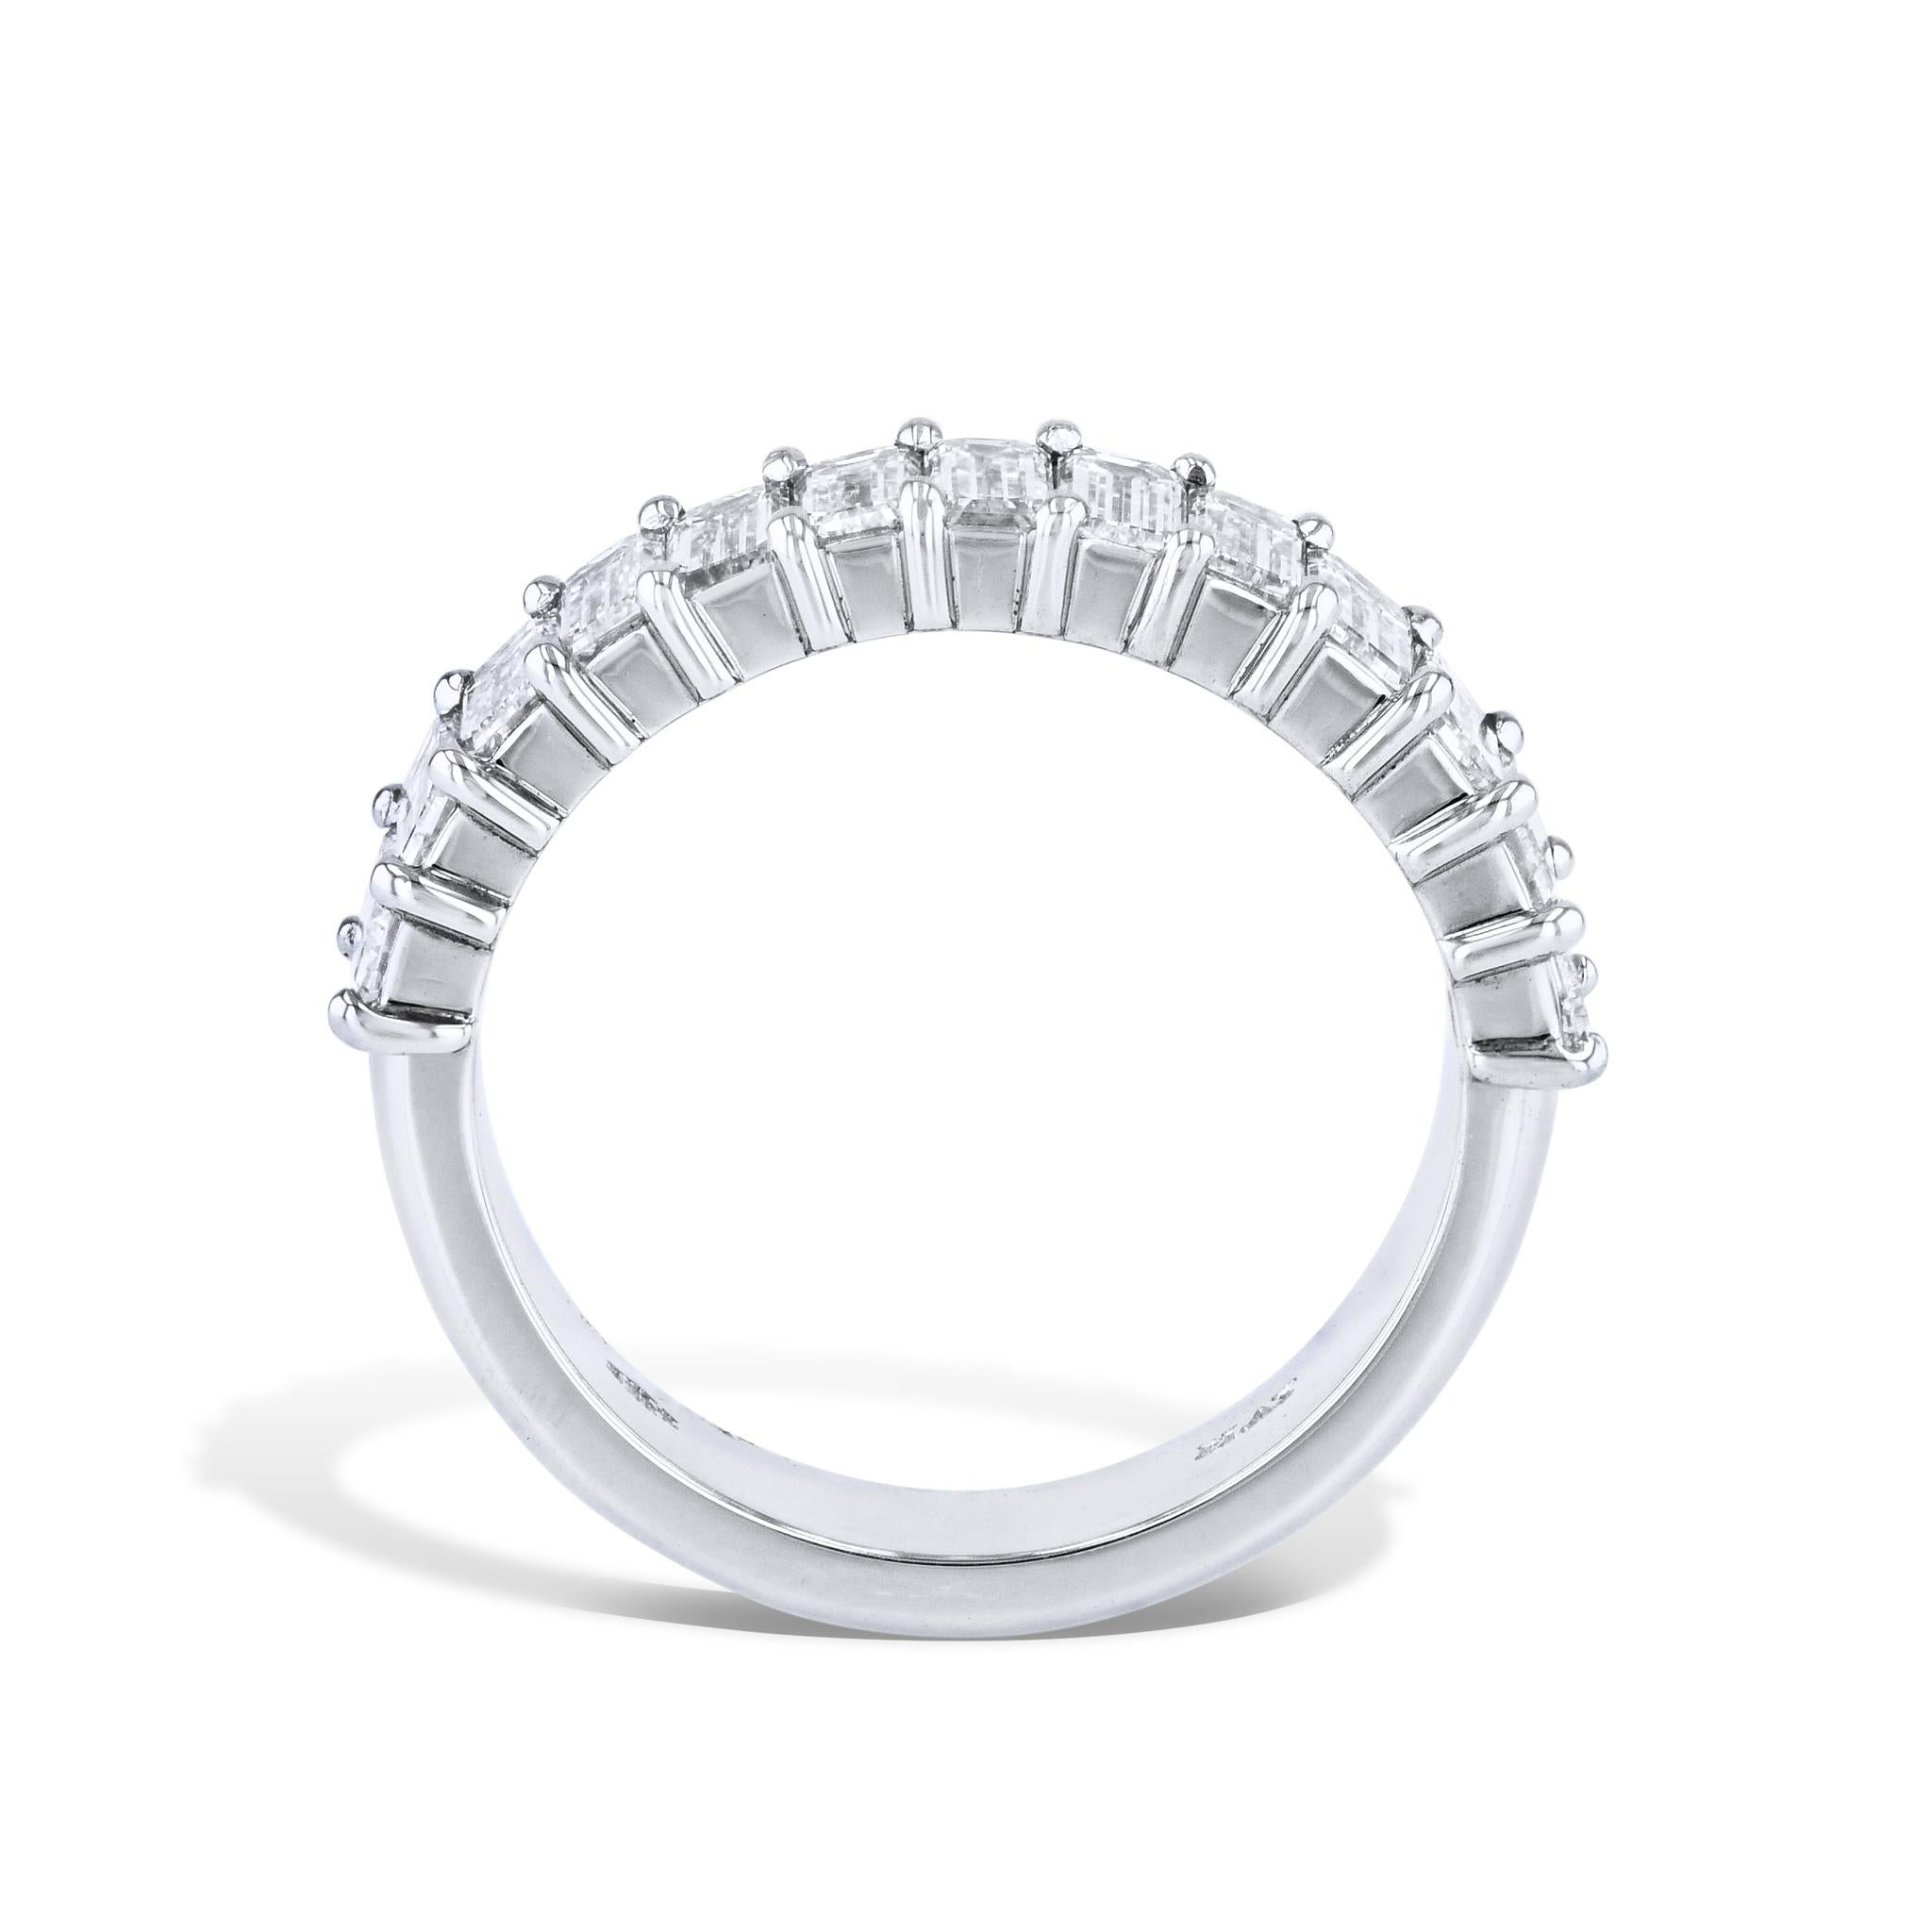 Handmade 2.20 carat Emerald Cut Diamond Platinum Anniversary Ring In New Condition For Sale In Miami, FL